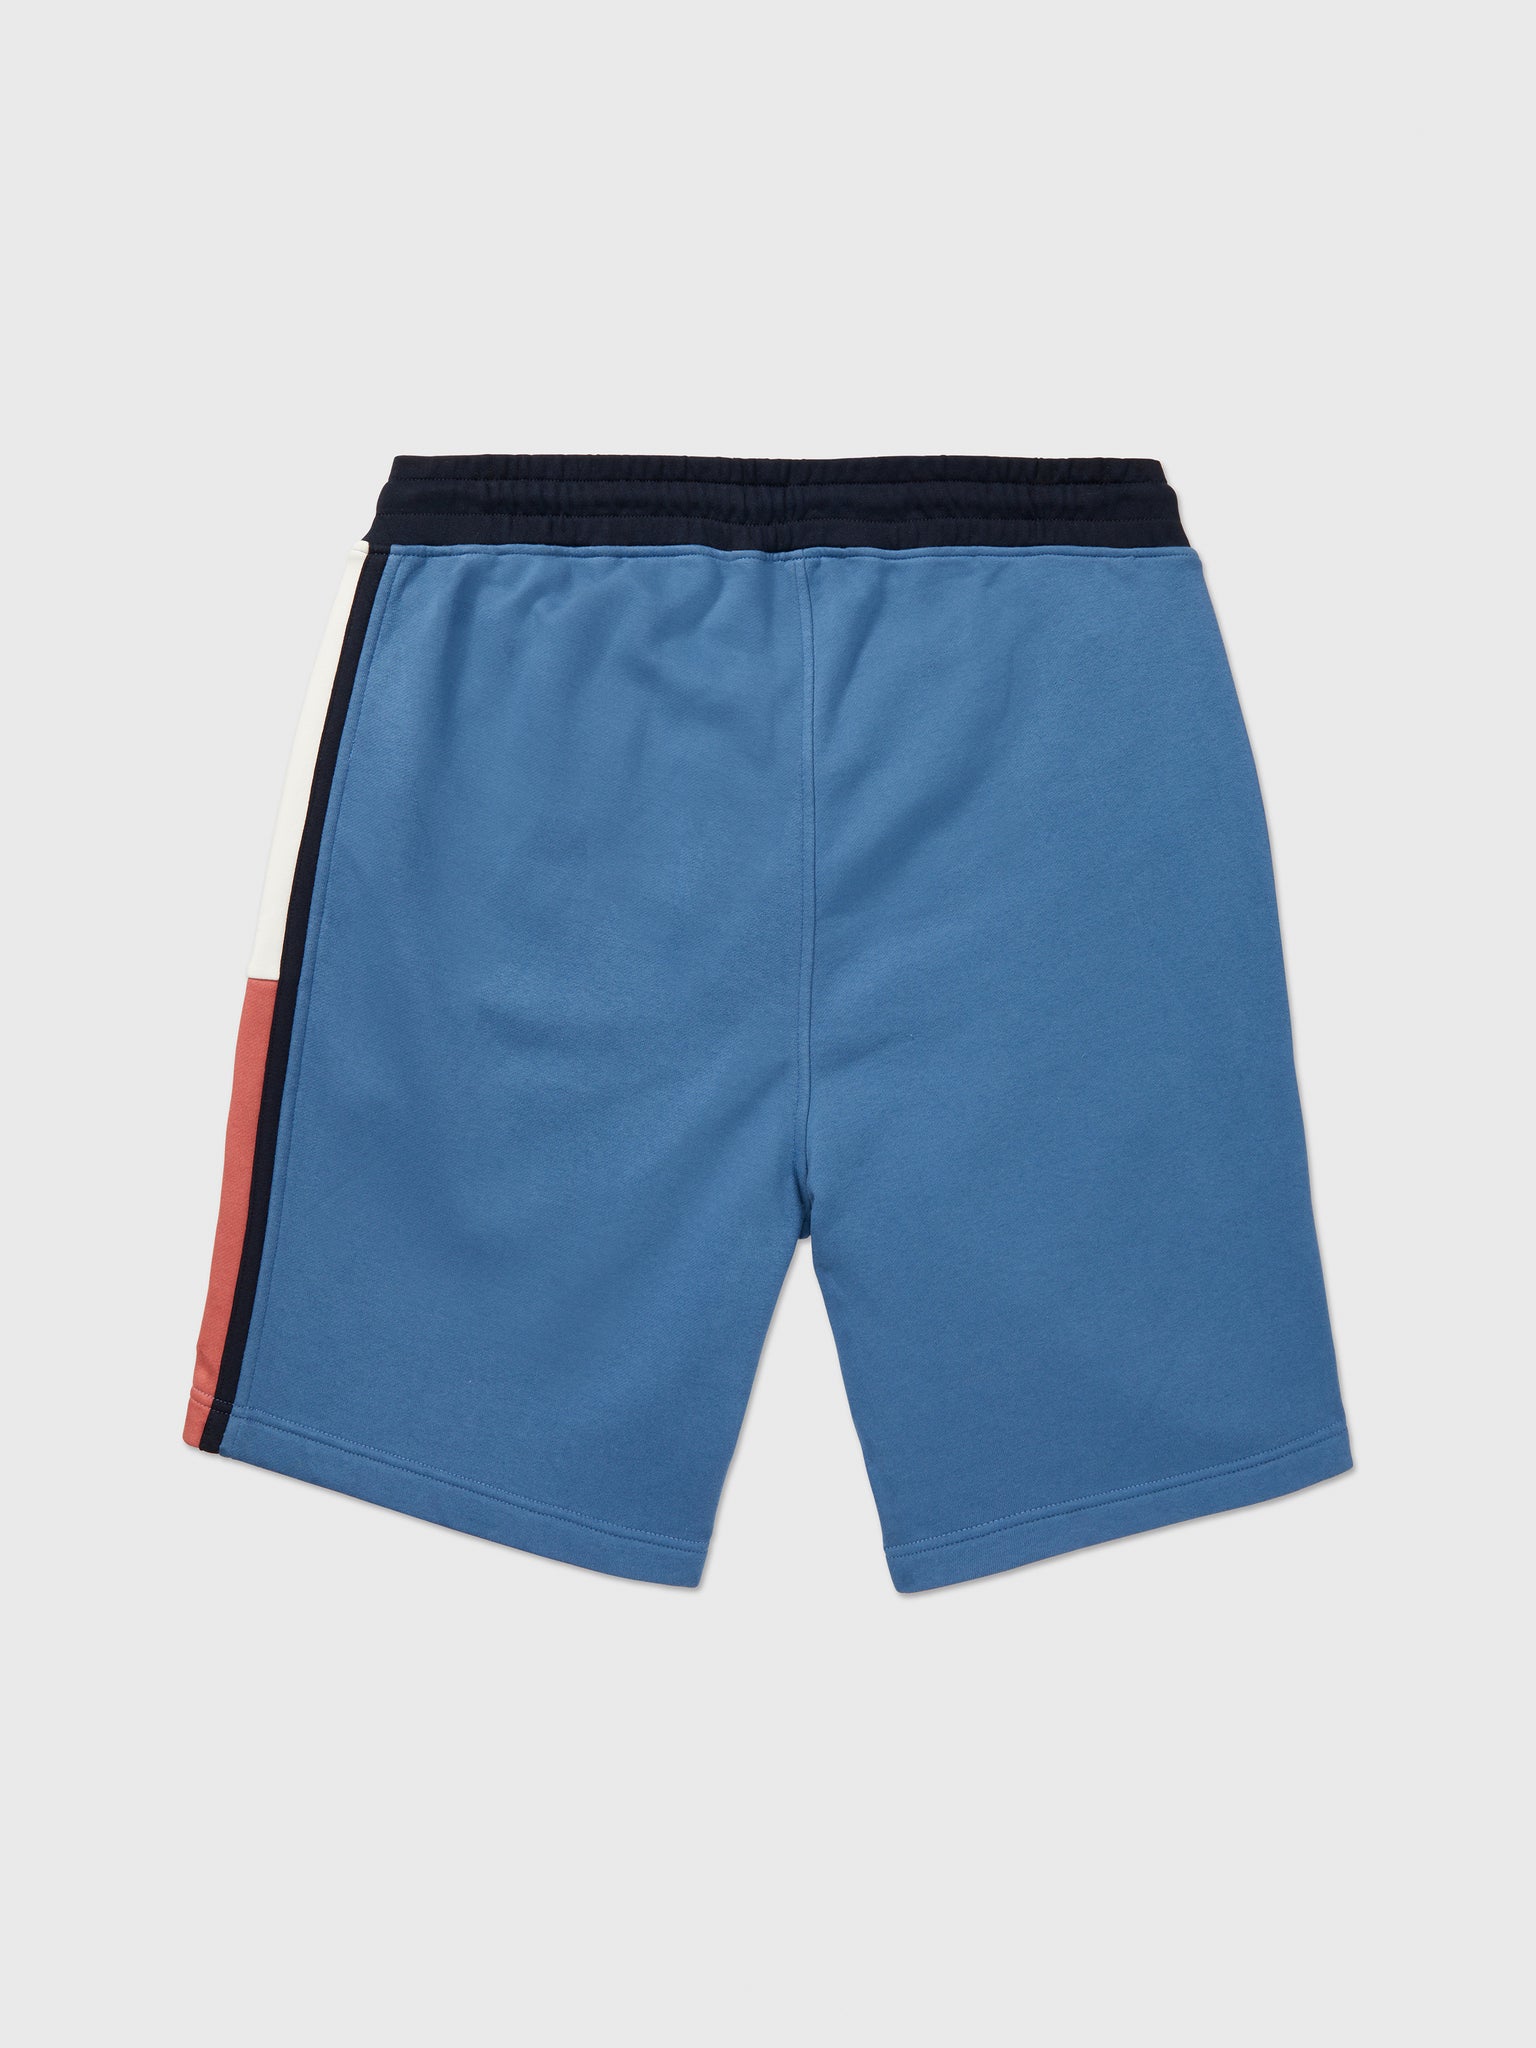 Leo Sweat Shorts Fleece (Mens) - North Sky Blue